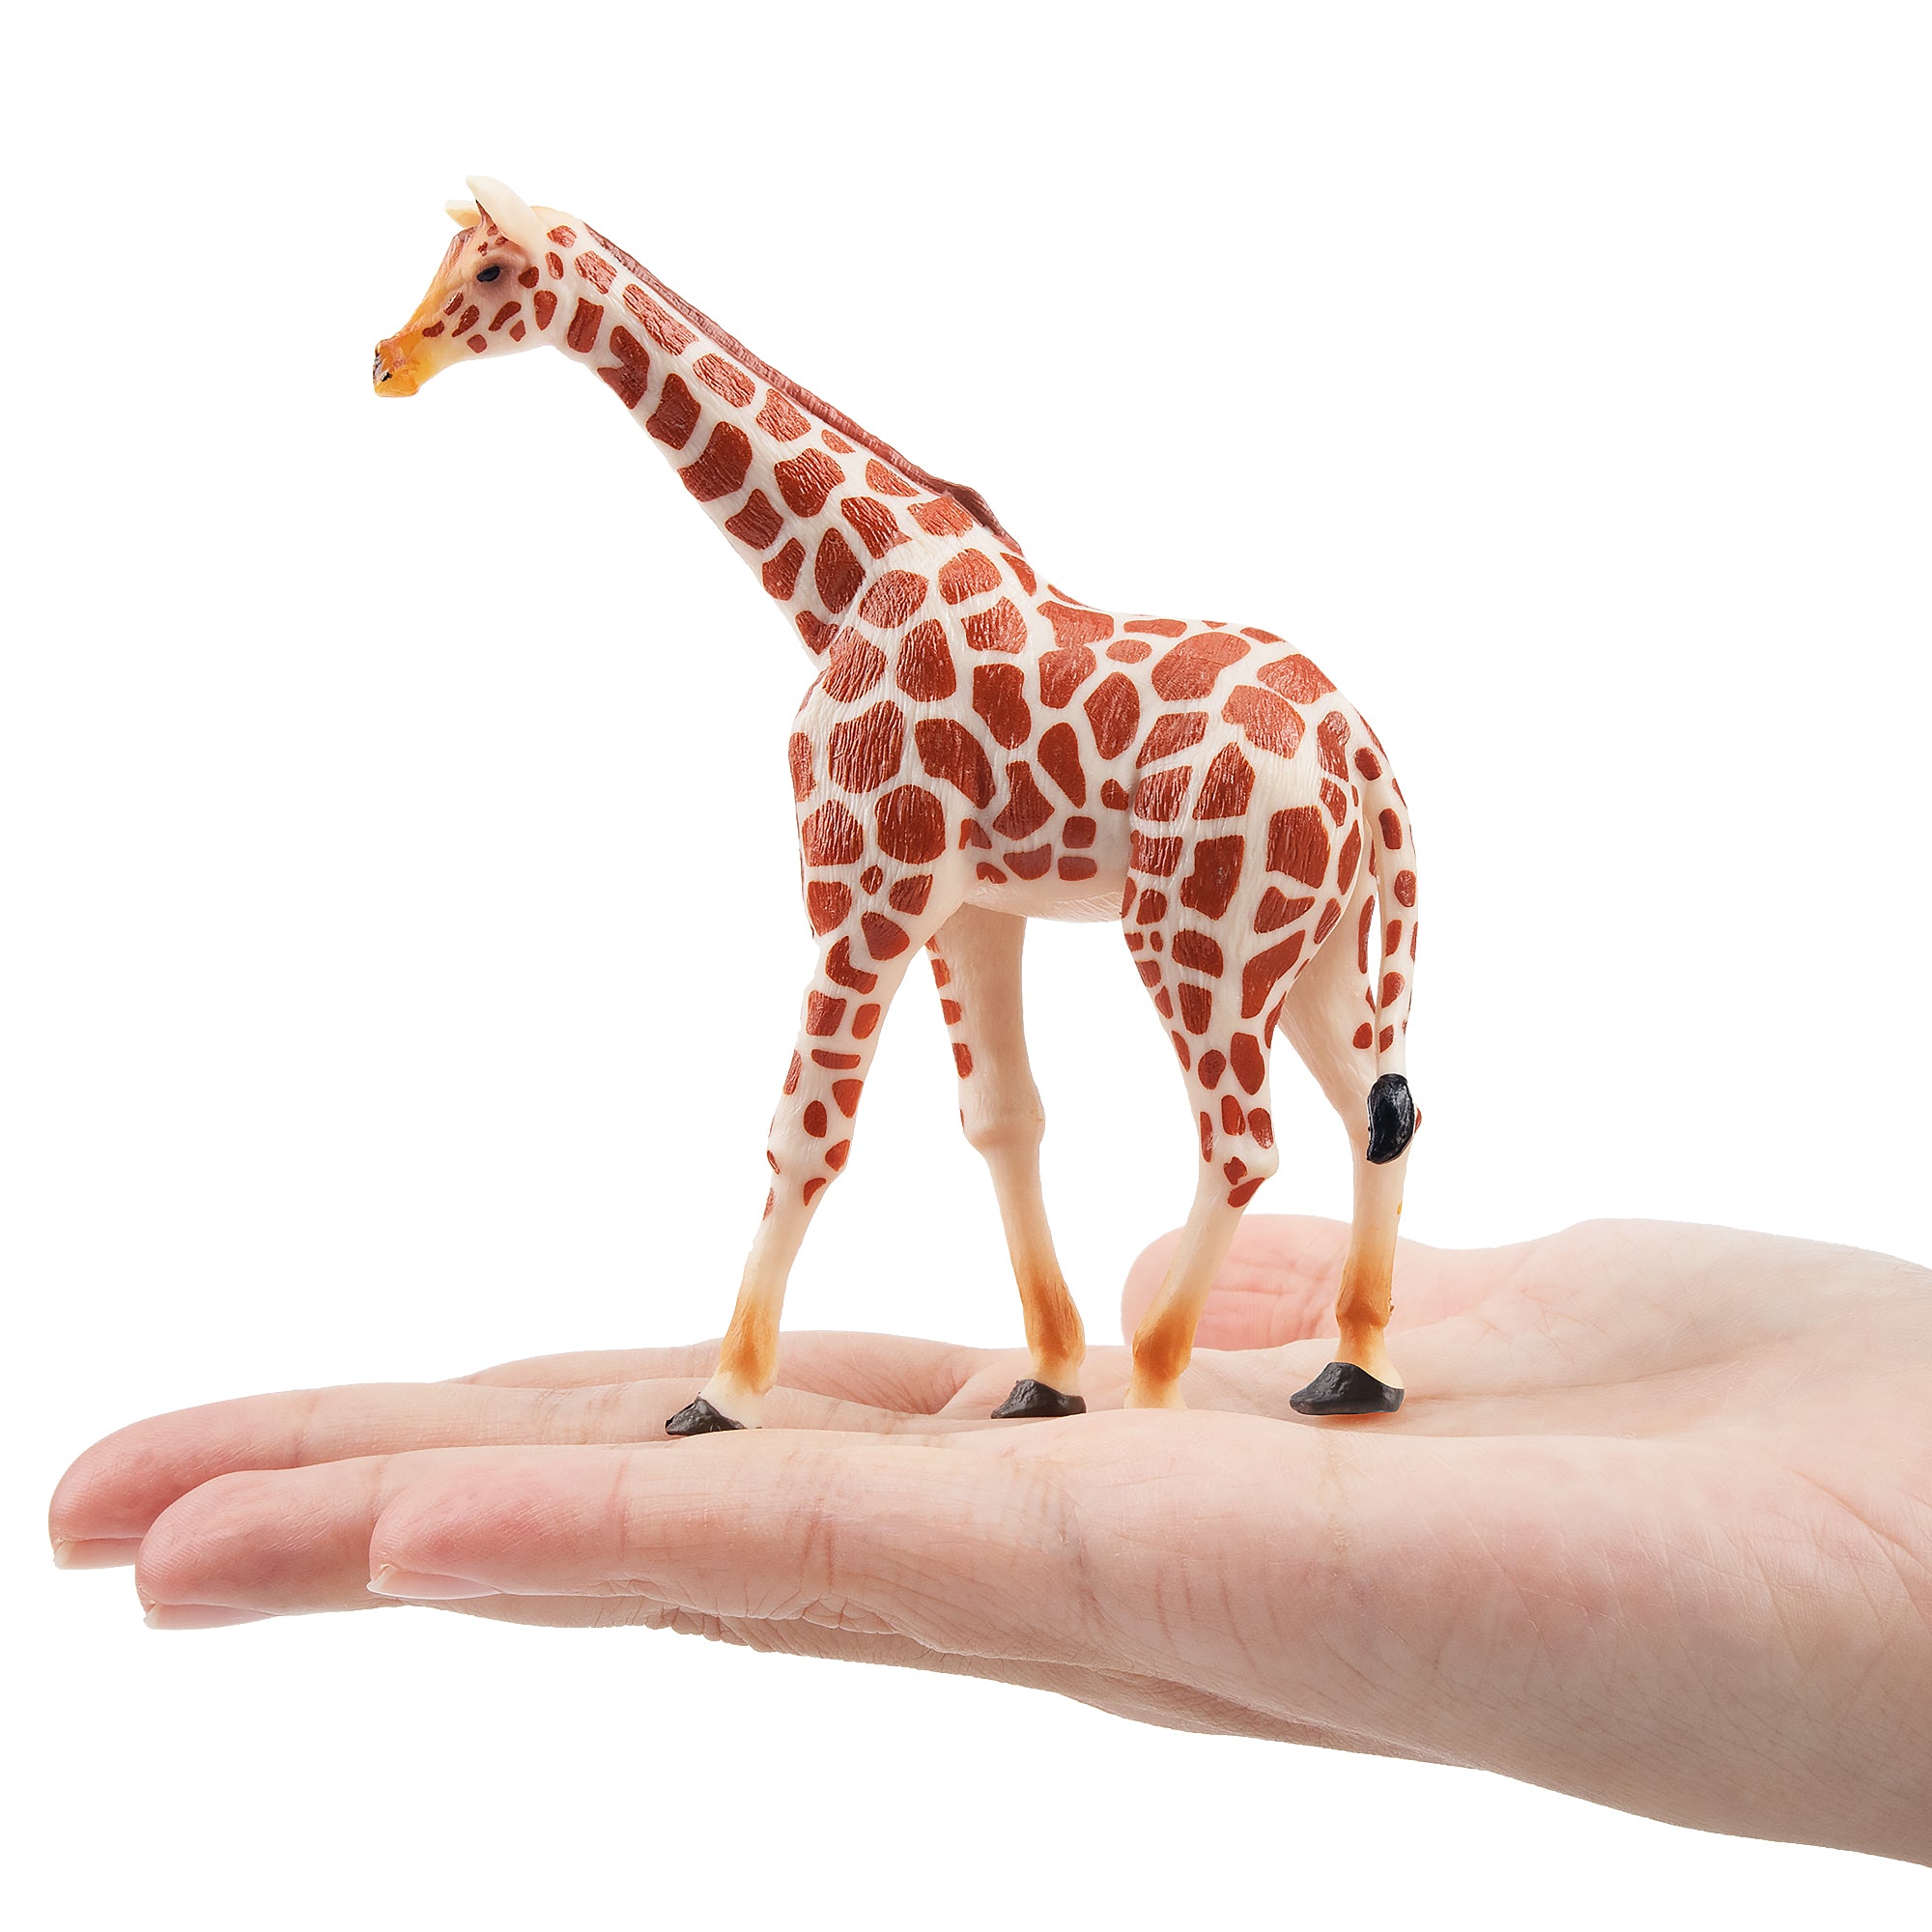 Toymany Standing Giraffe Figurine Toy-on hand